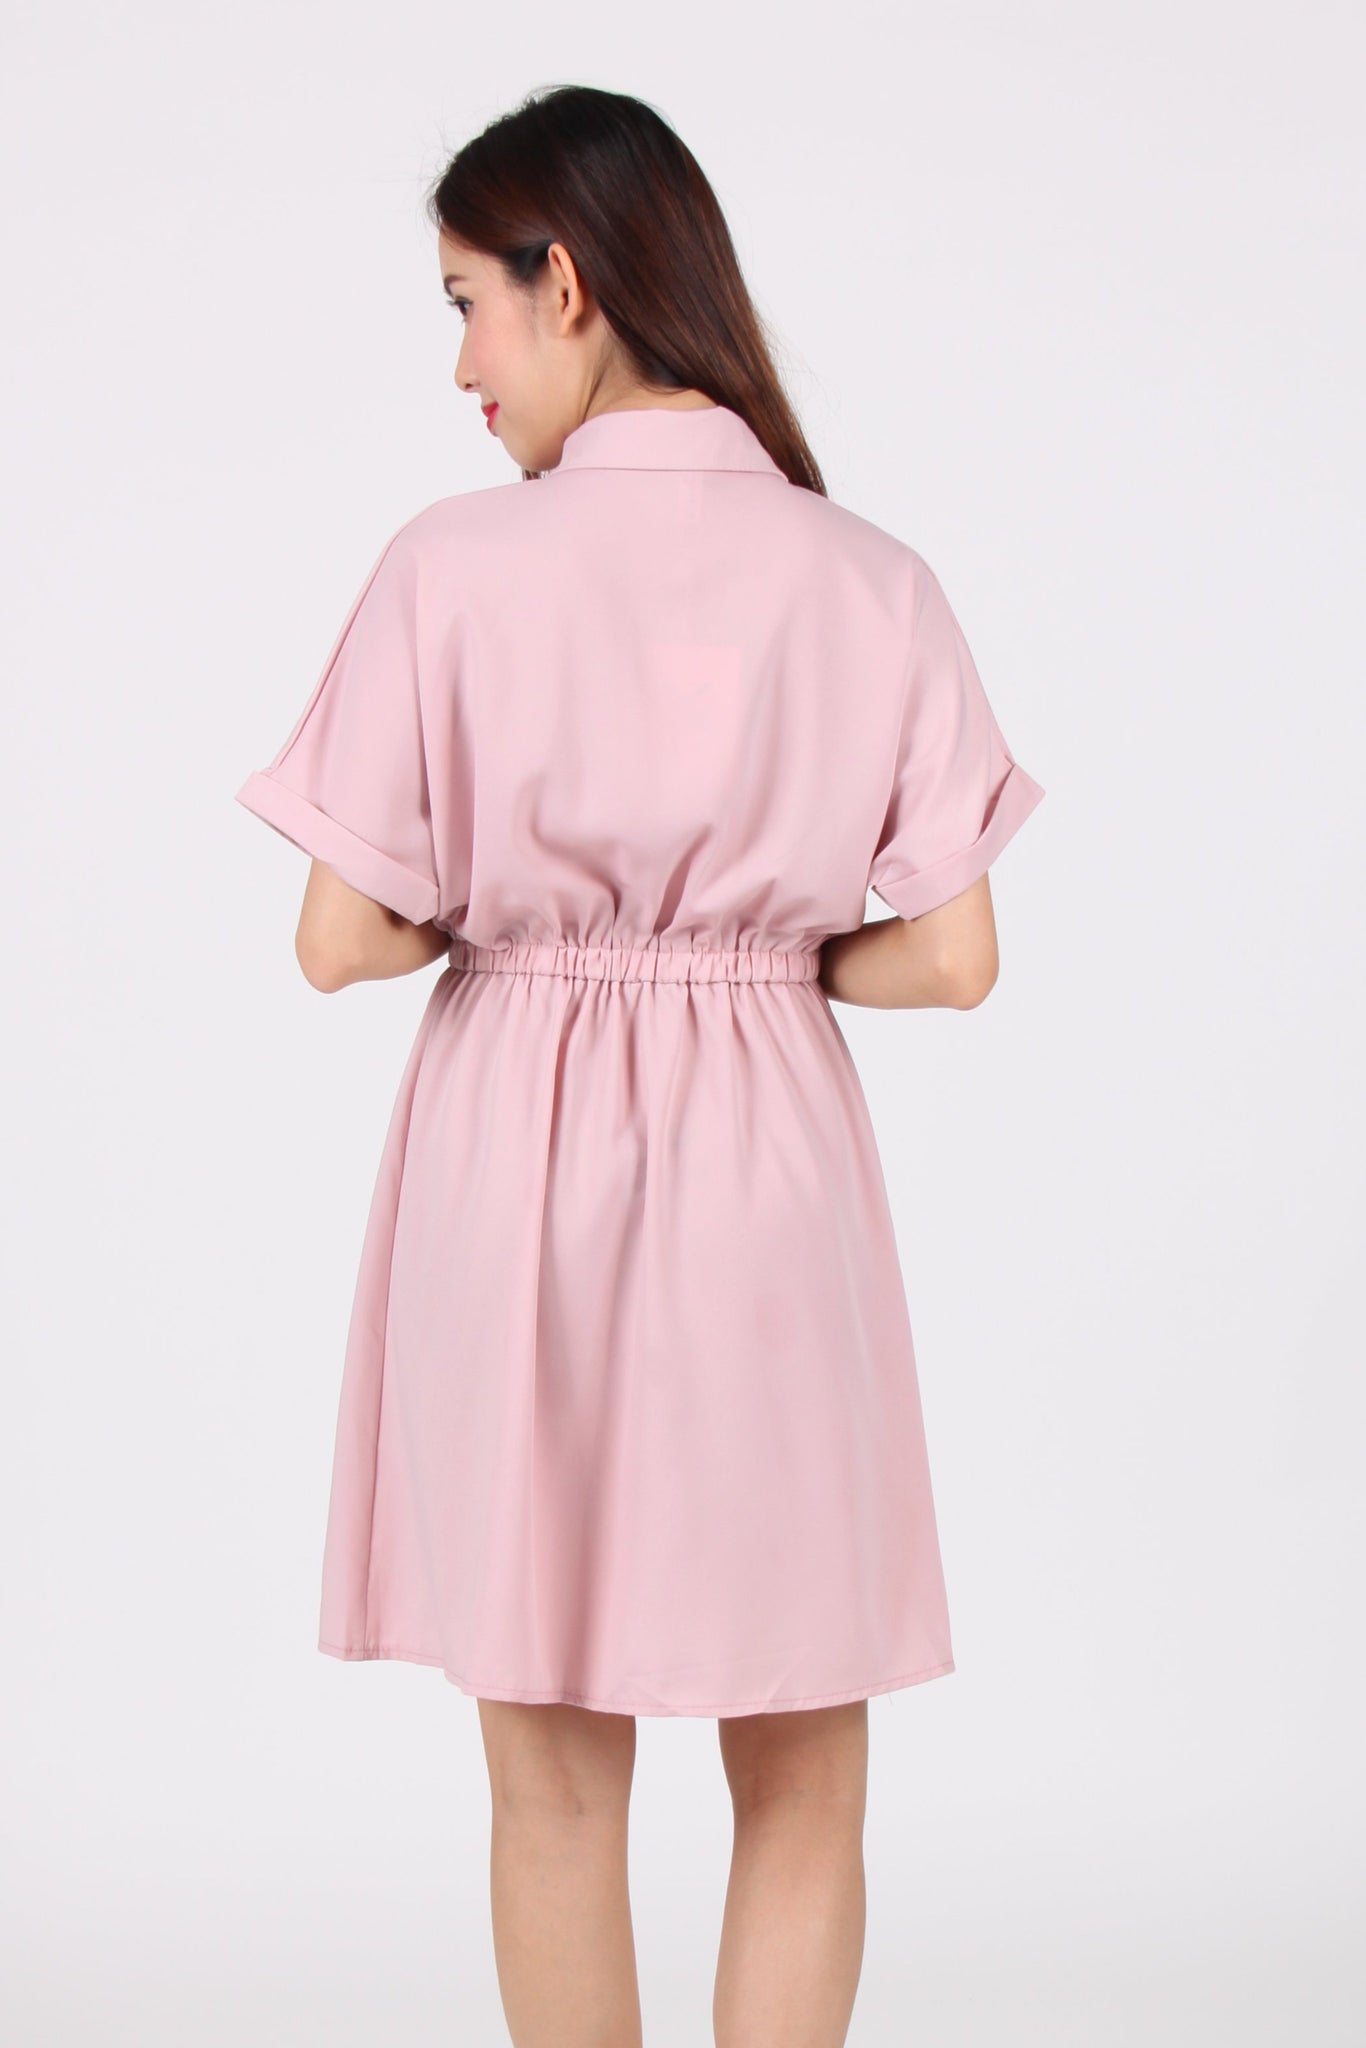 Collar Waist Tie Bat Wing Shirt Dress in Pink